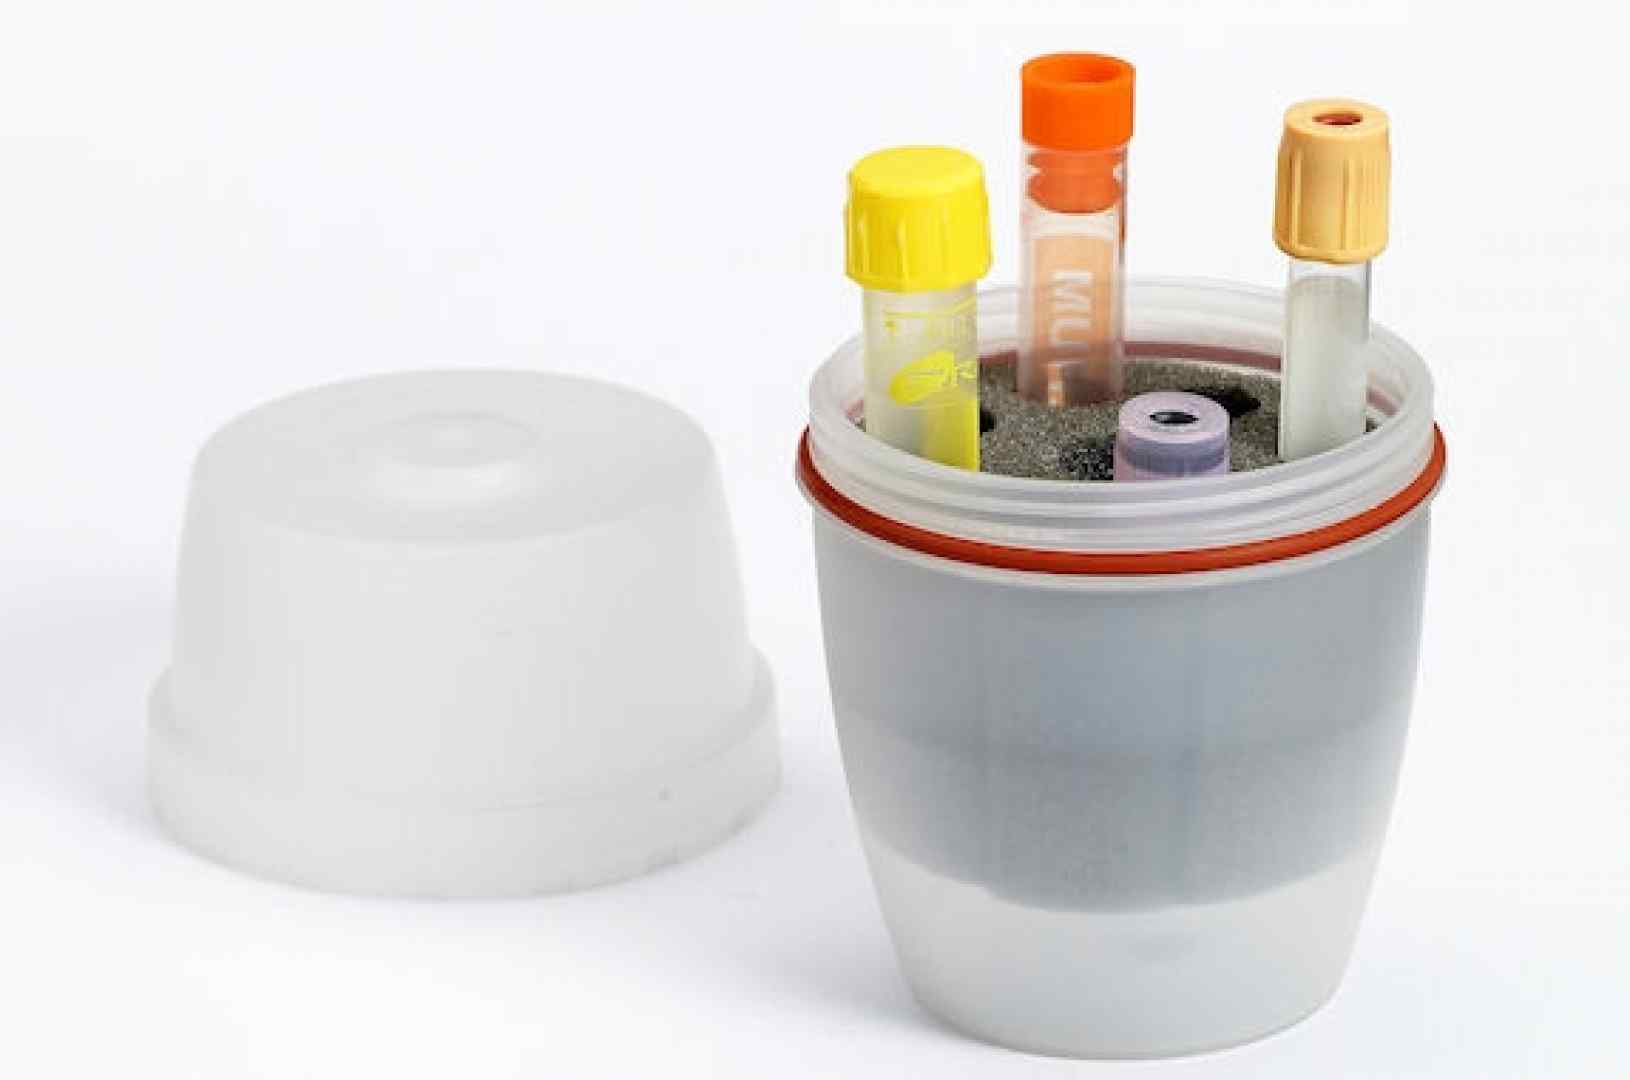 Transport kit for medical samples